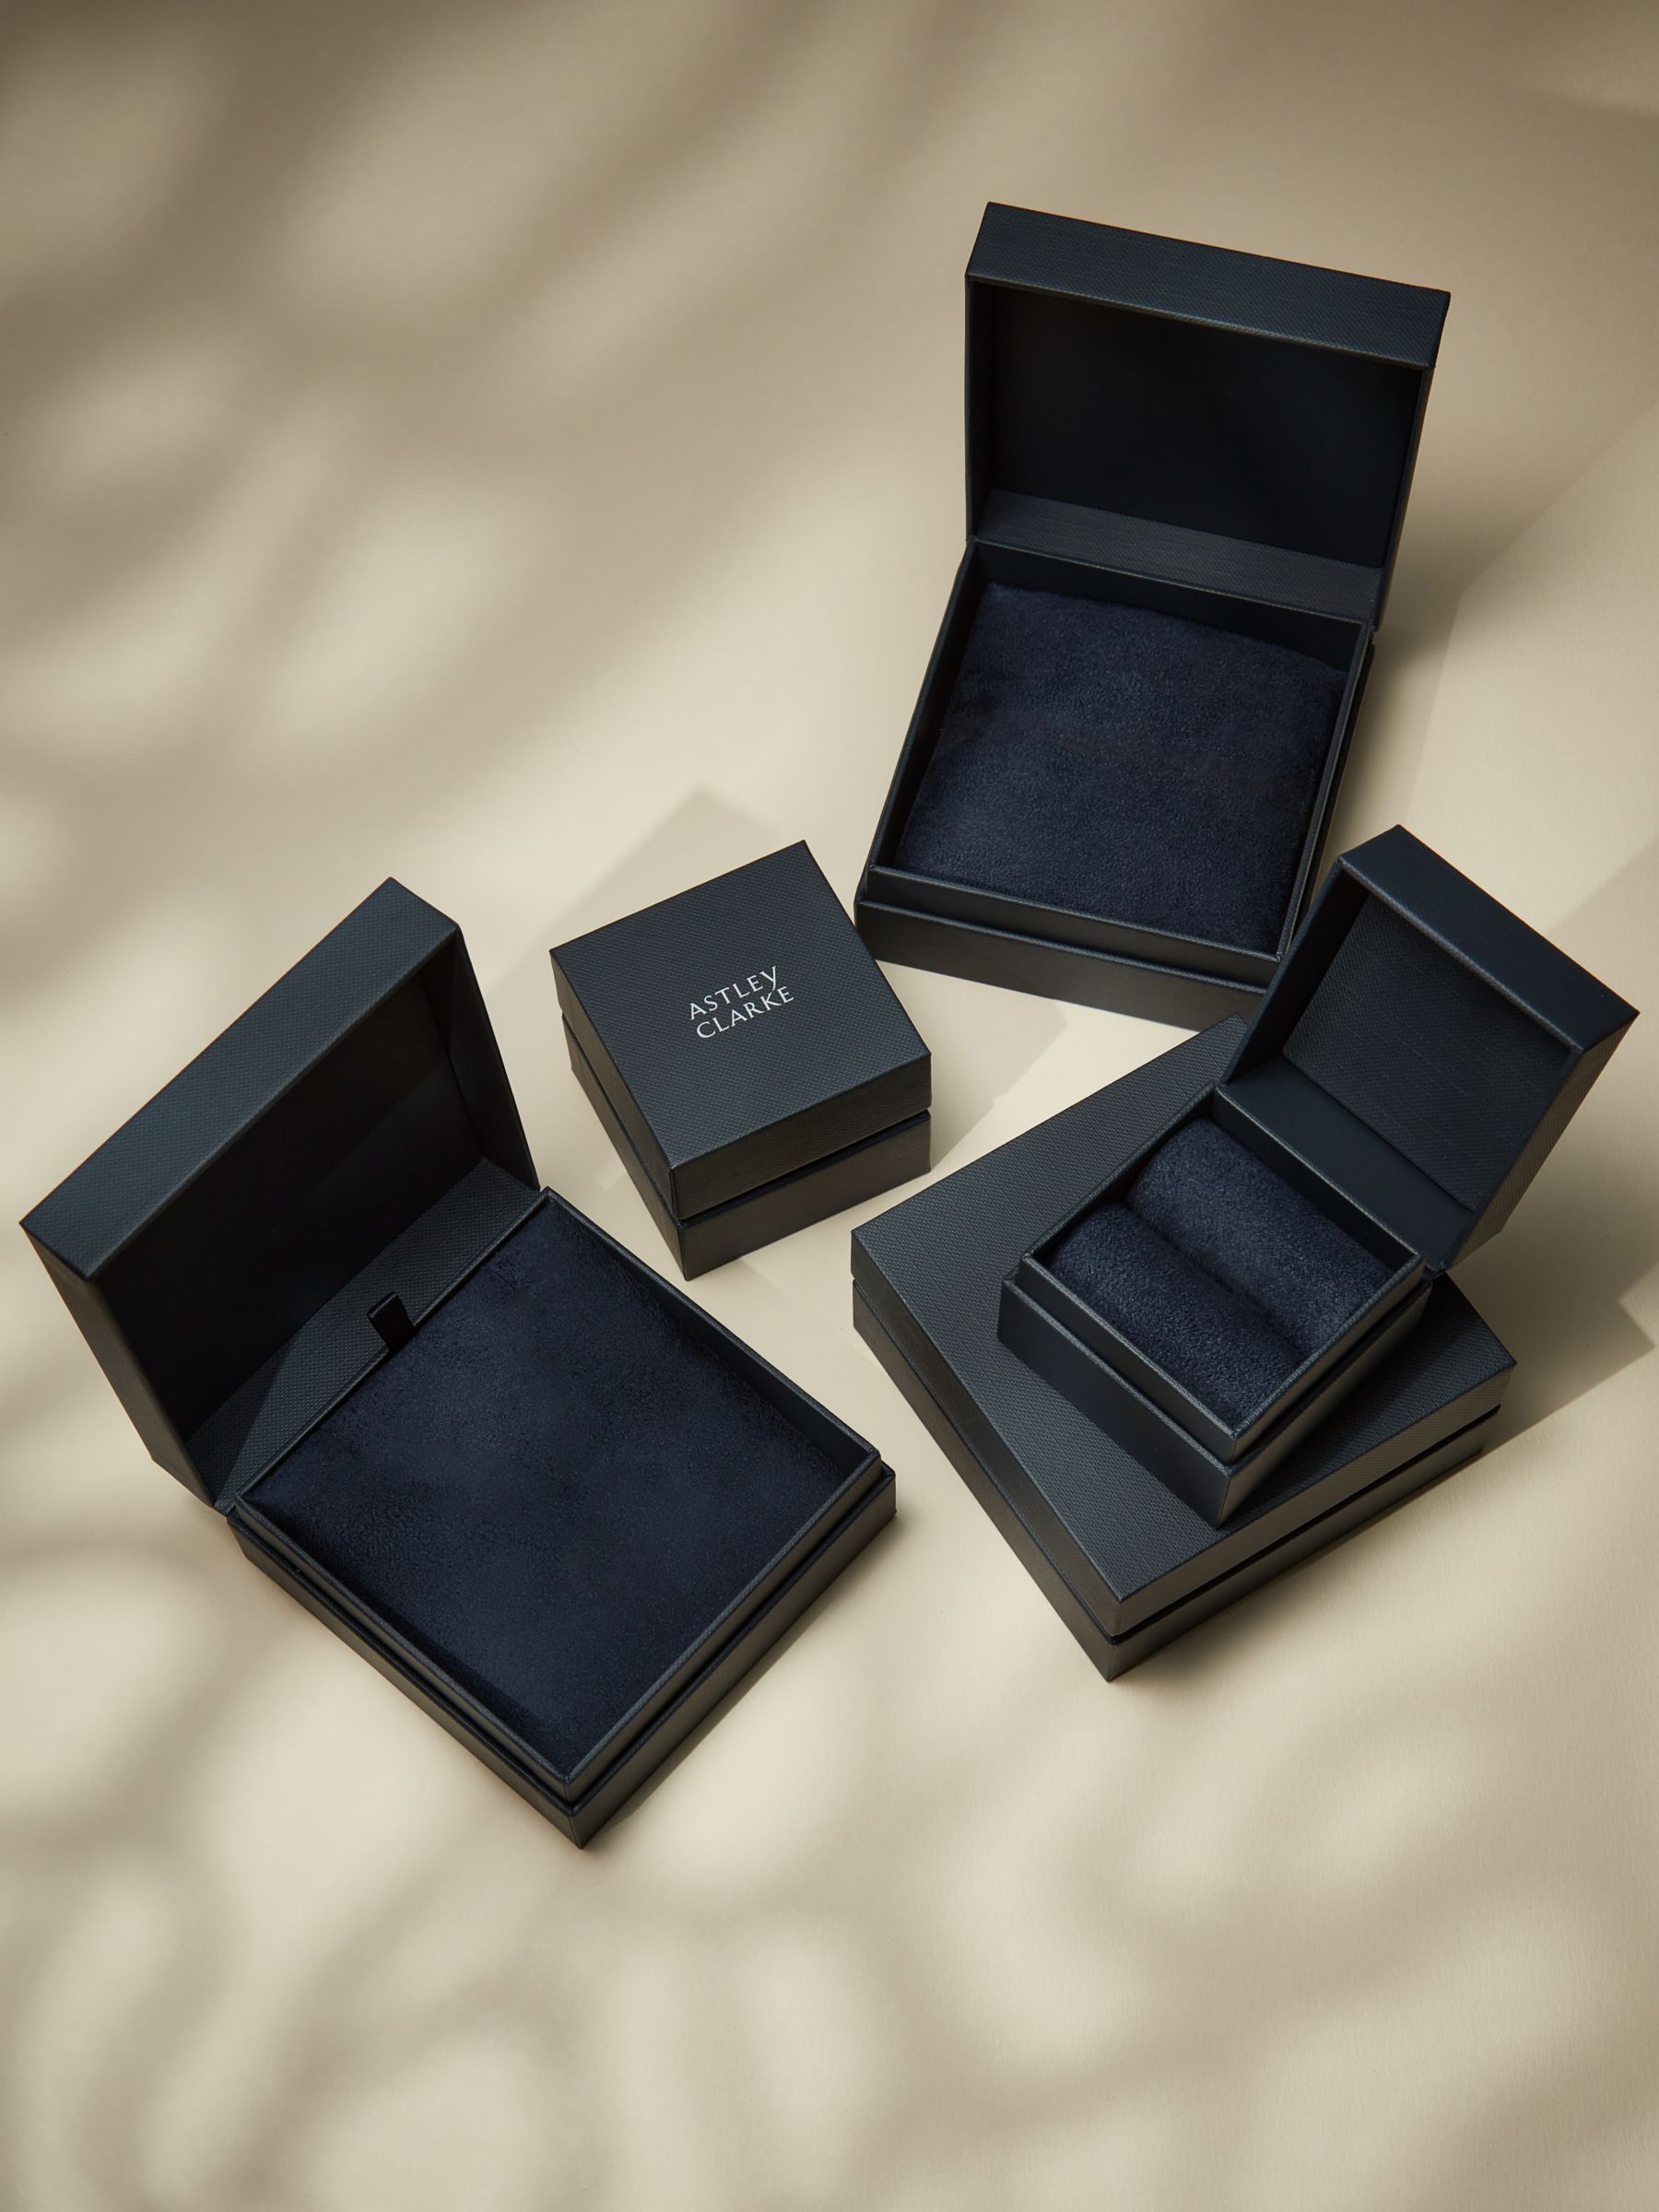 Buy Astley Clarke Black Onyx Pendant Necklace, Gold/Black Online at johnlewis.com